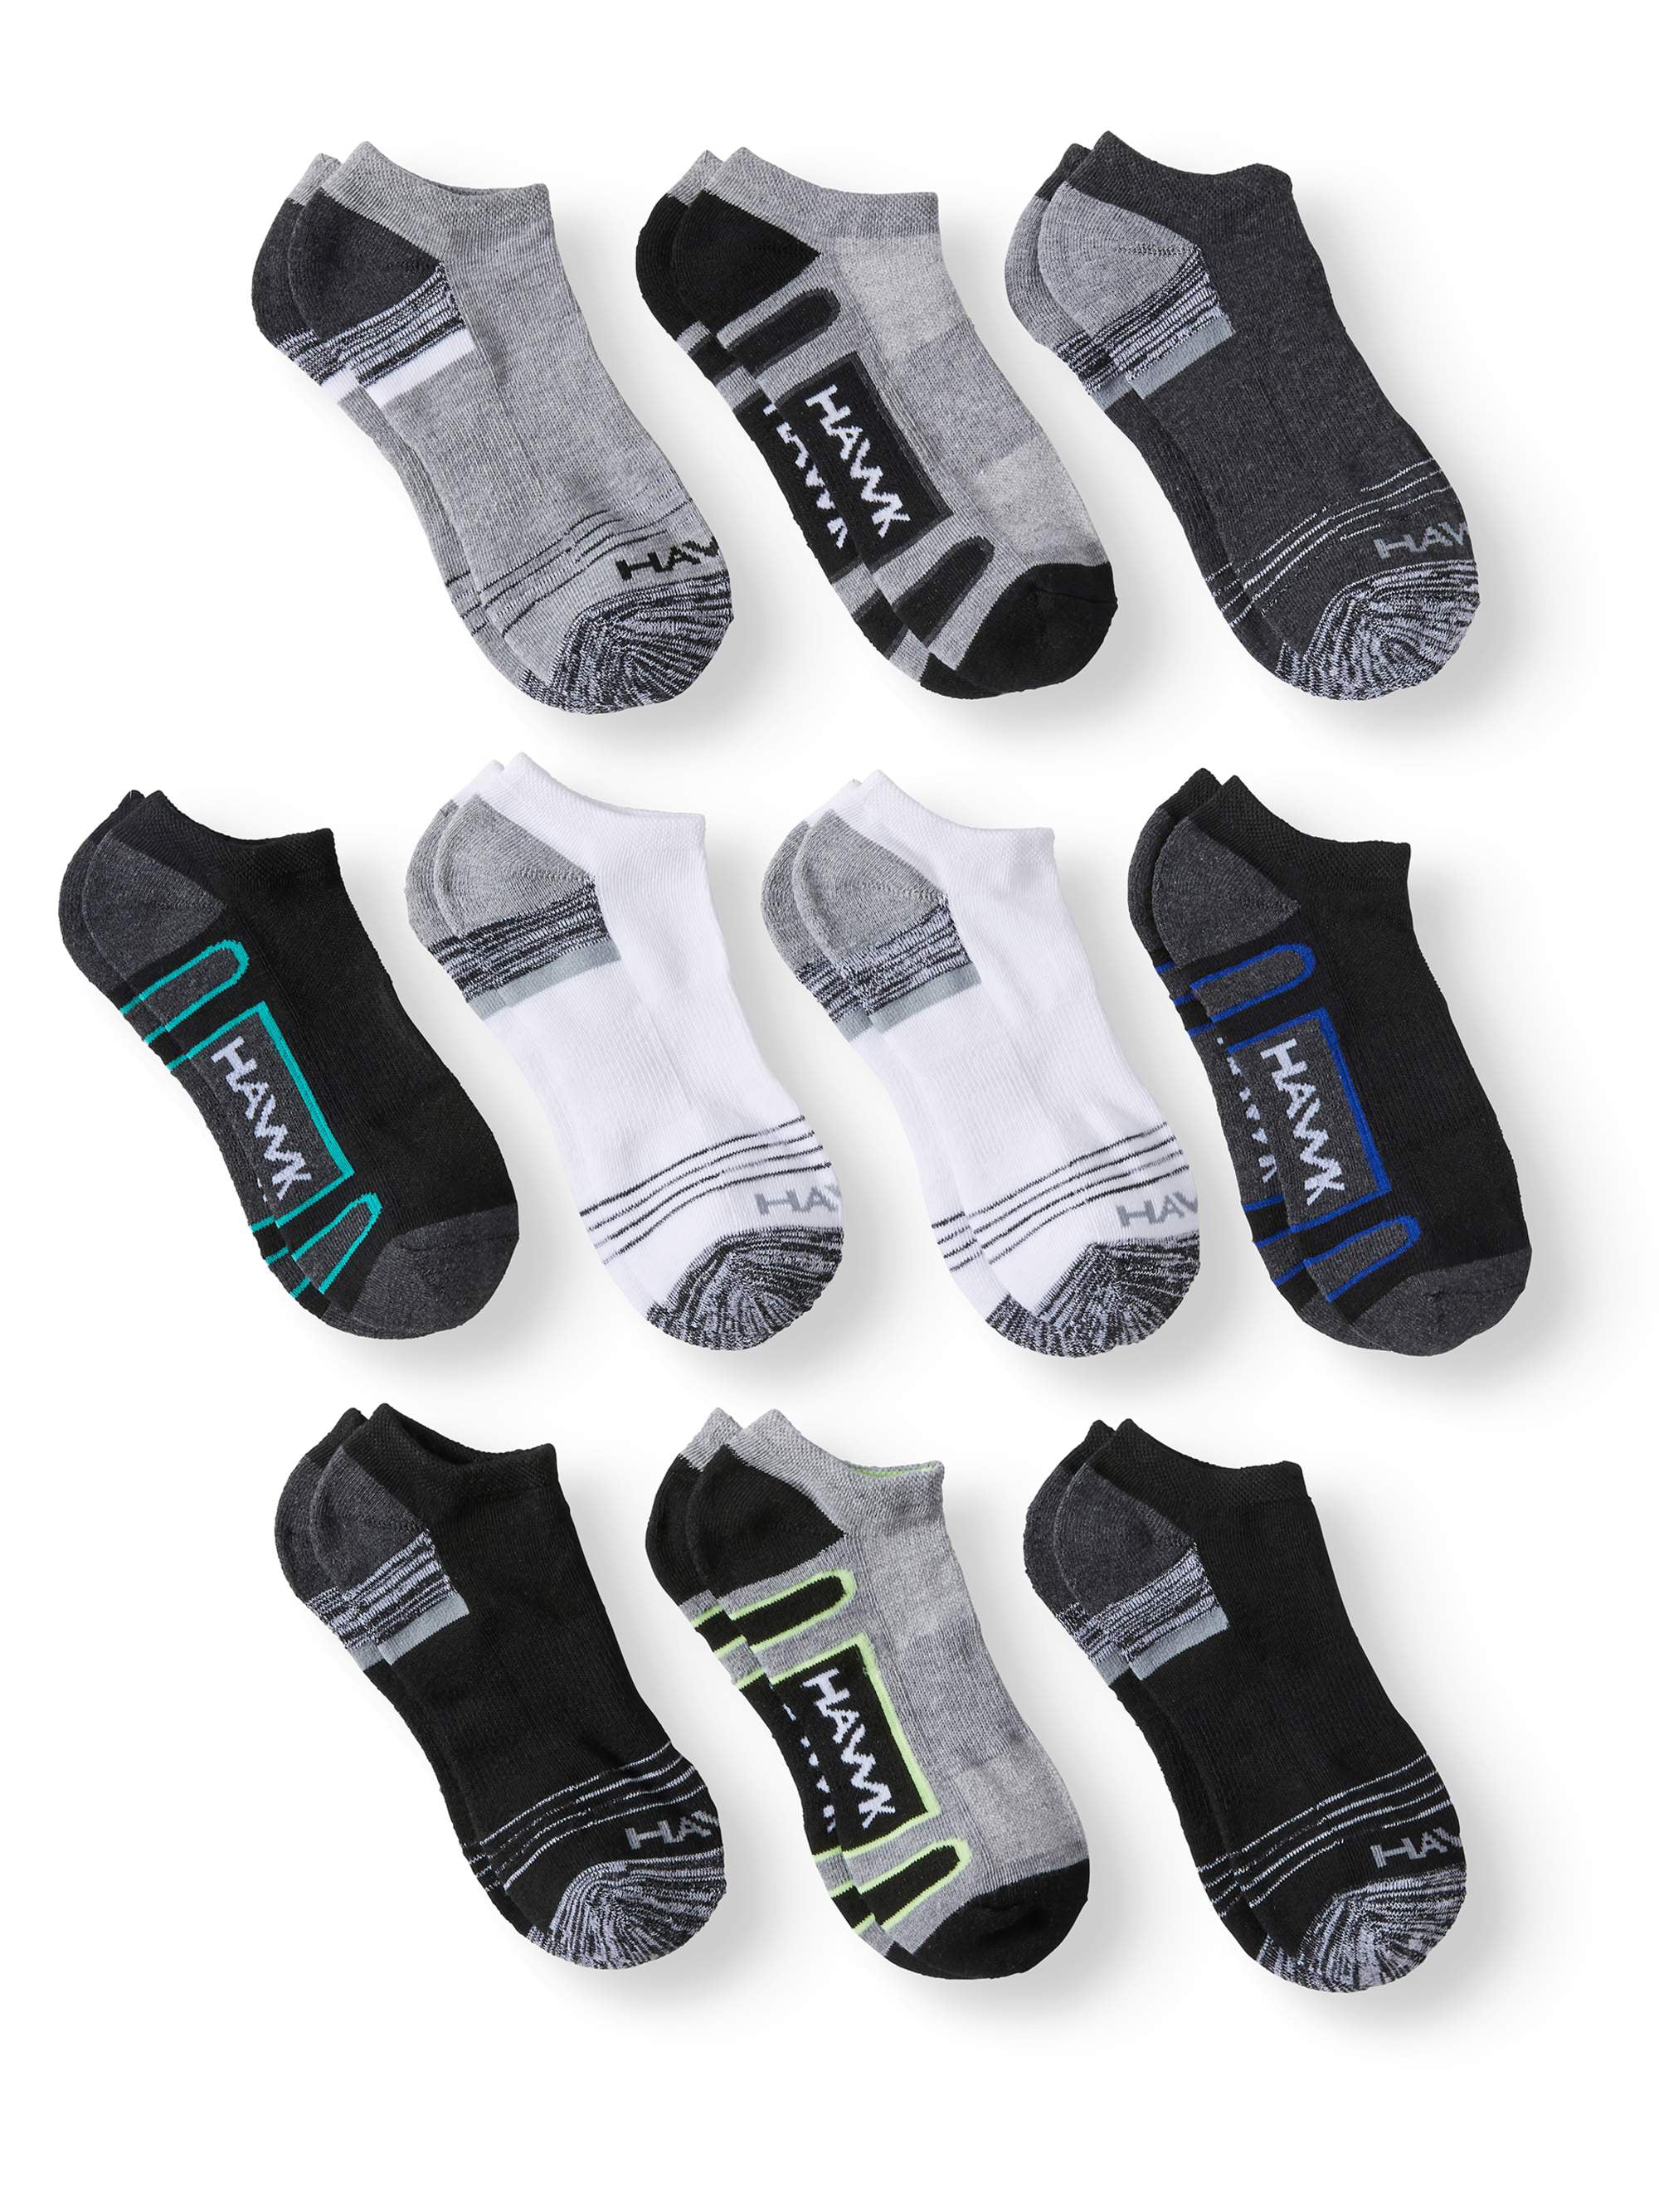 Tony Hawk Boys Socks, 10 Pack Low Cut Athletic Sizes M - L - Walmart.com